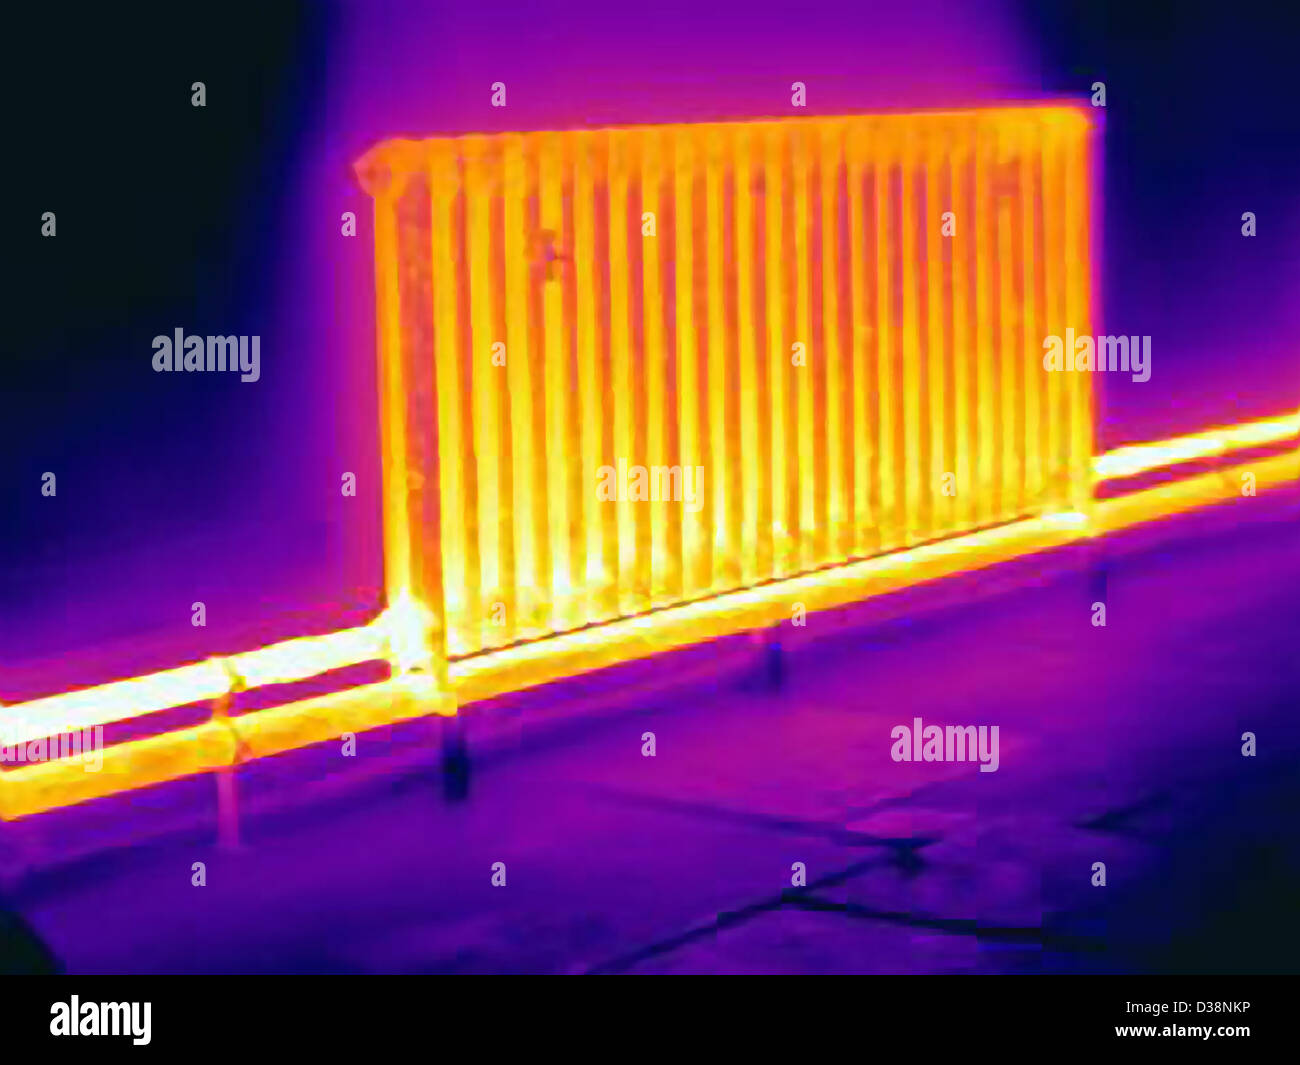 Thermal image of radiator Stock Photo